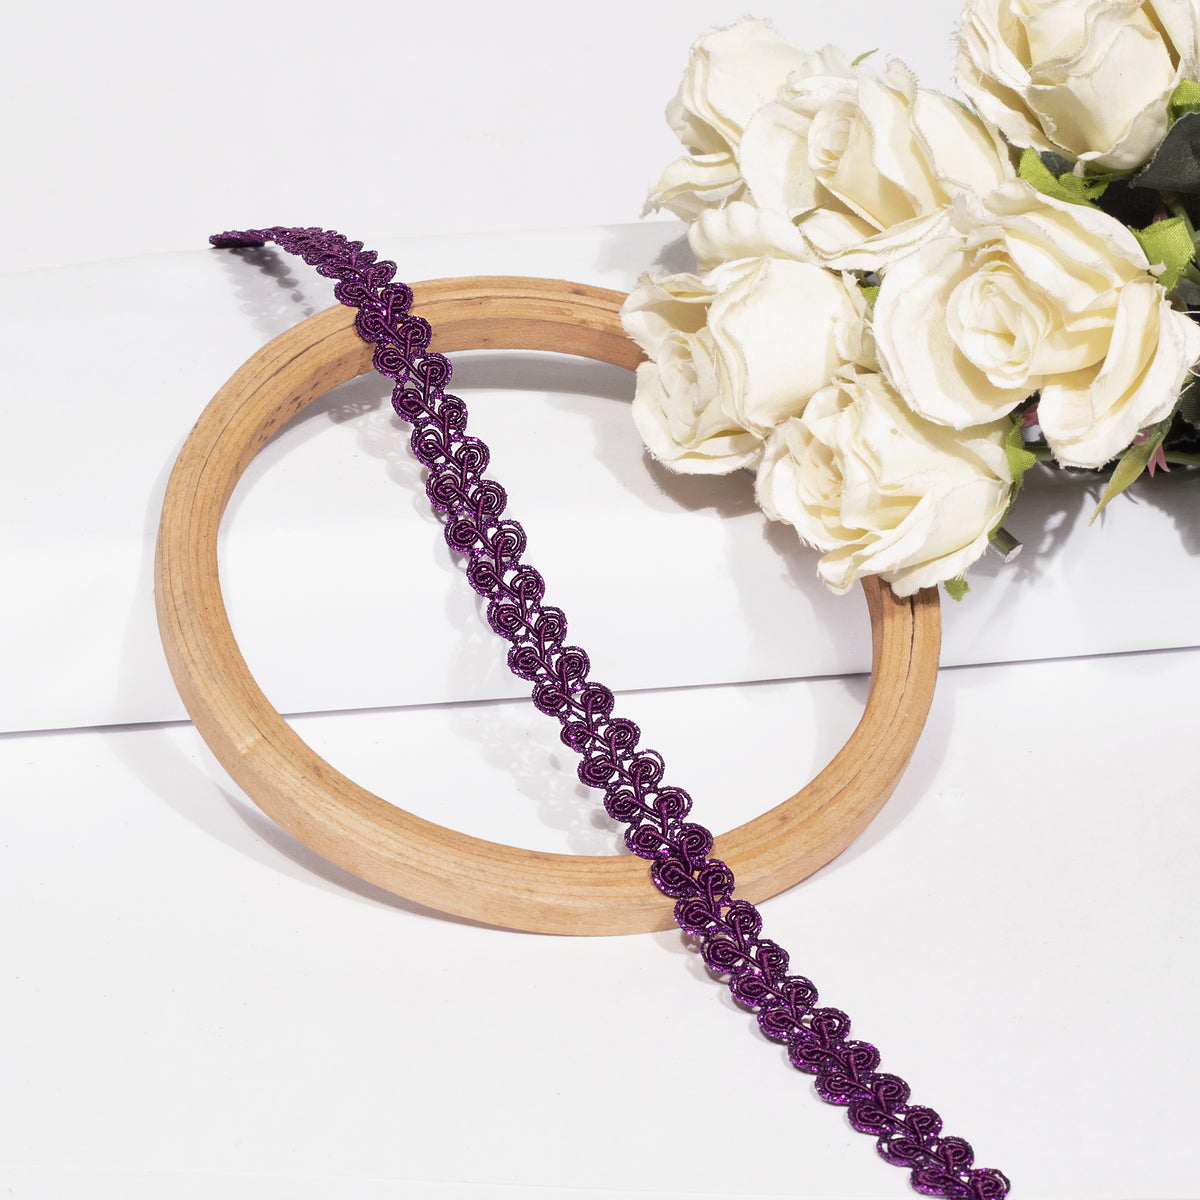 Glittering Purple Braid Lace (18 Mtr)